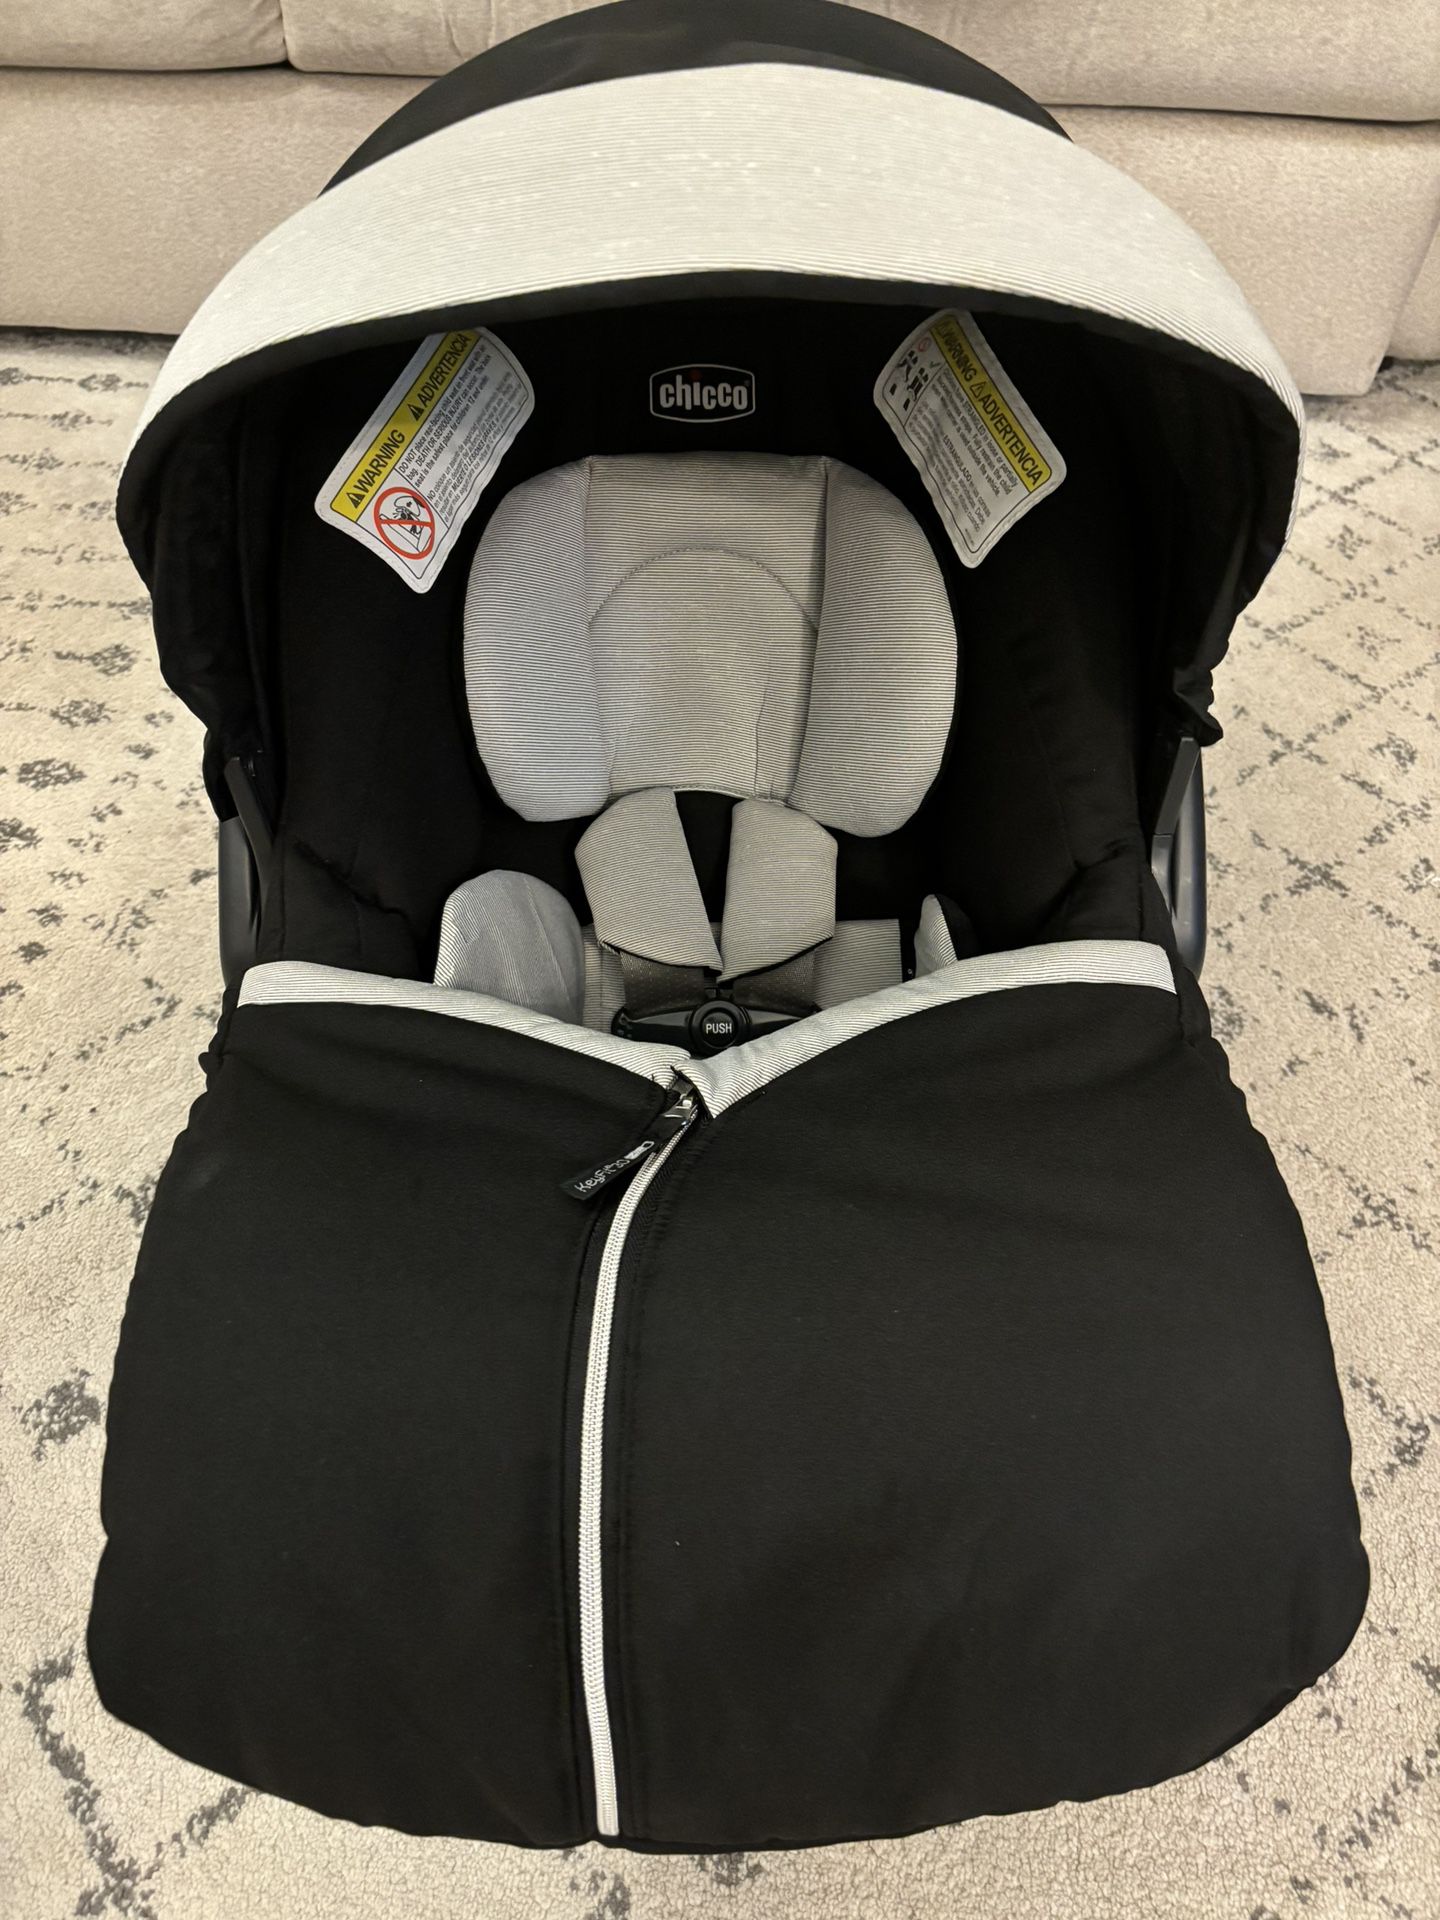 Chicco Keyfit 30 Infant Car Seat + 2 Bases